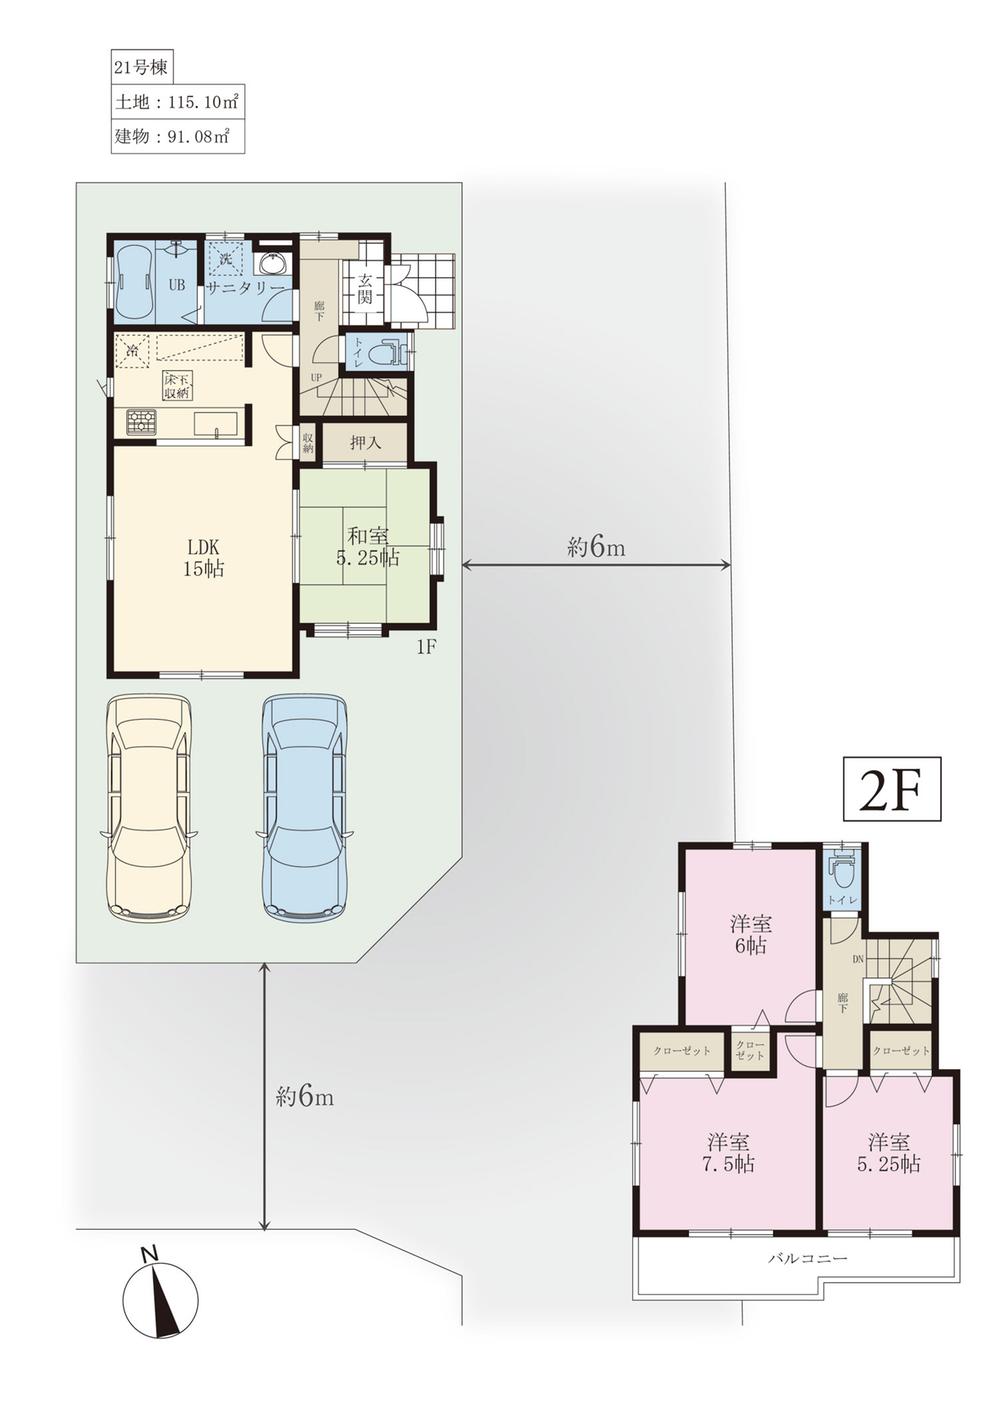 Floor plan. (21 Building), Price 41,800,000 yen, 4LDK, Land area 115.1 sq m , Building area 91.08 sq m